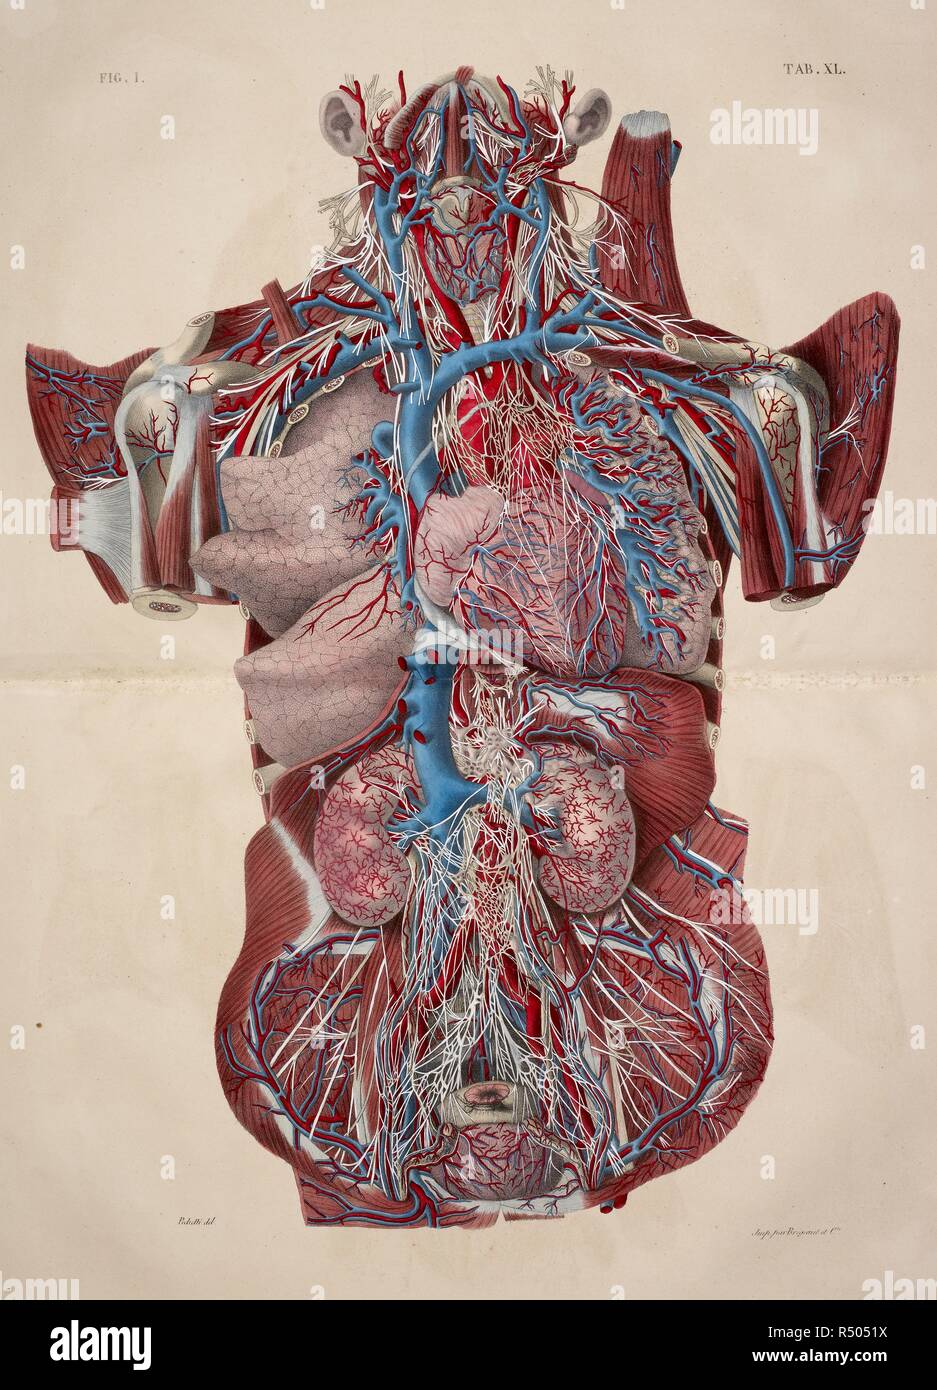 Disegno Anatomico Gli Organi Interni Cuore I Reni Torace Planches Anatomiques Du Corps Humain Executei Es